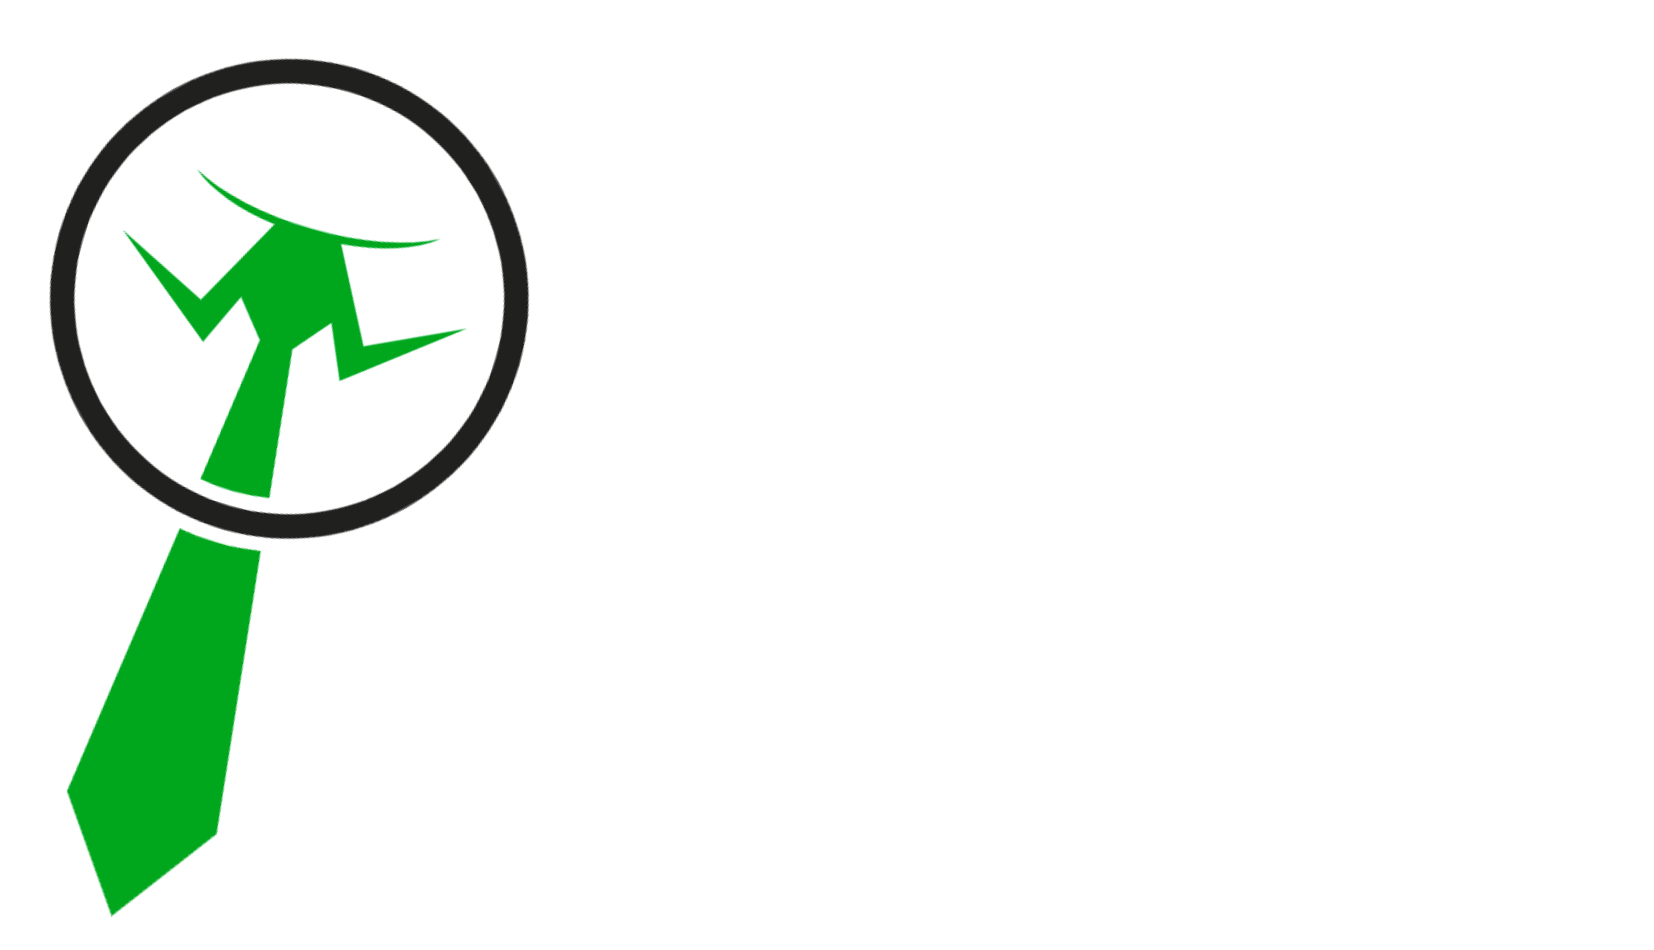 Labor Experta